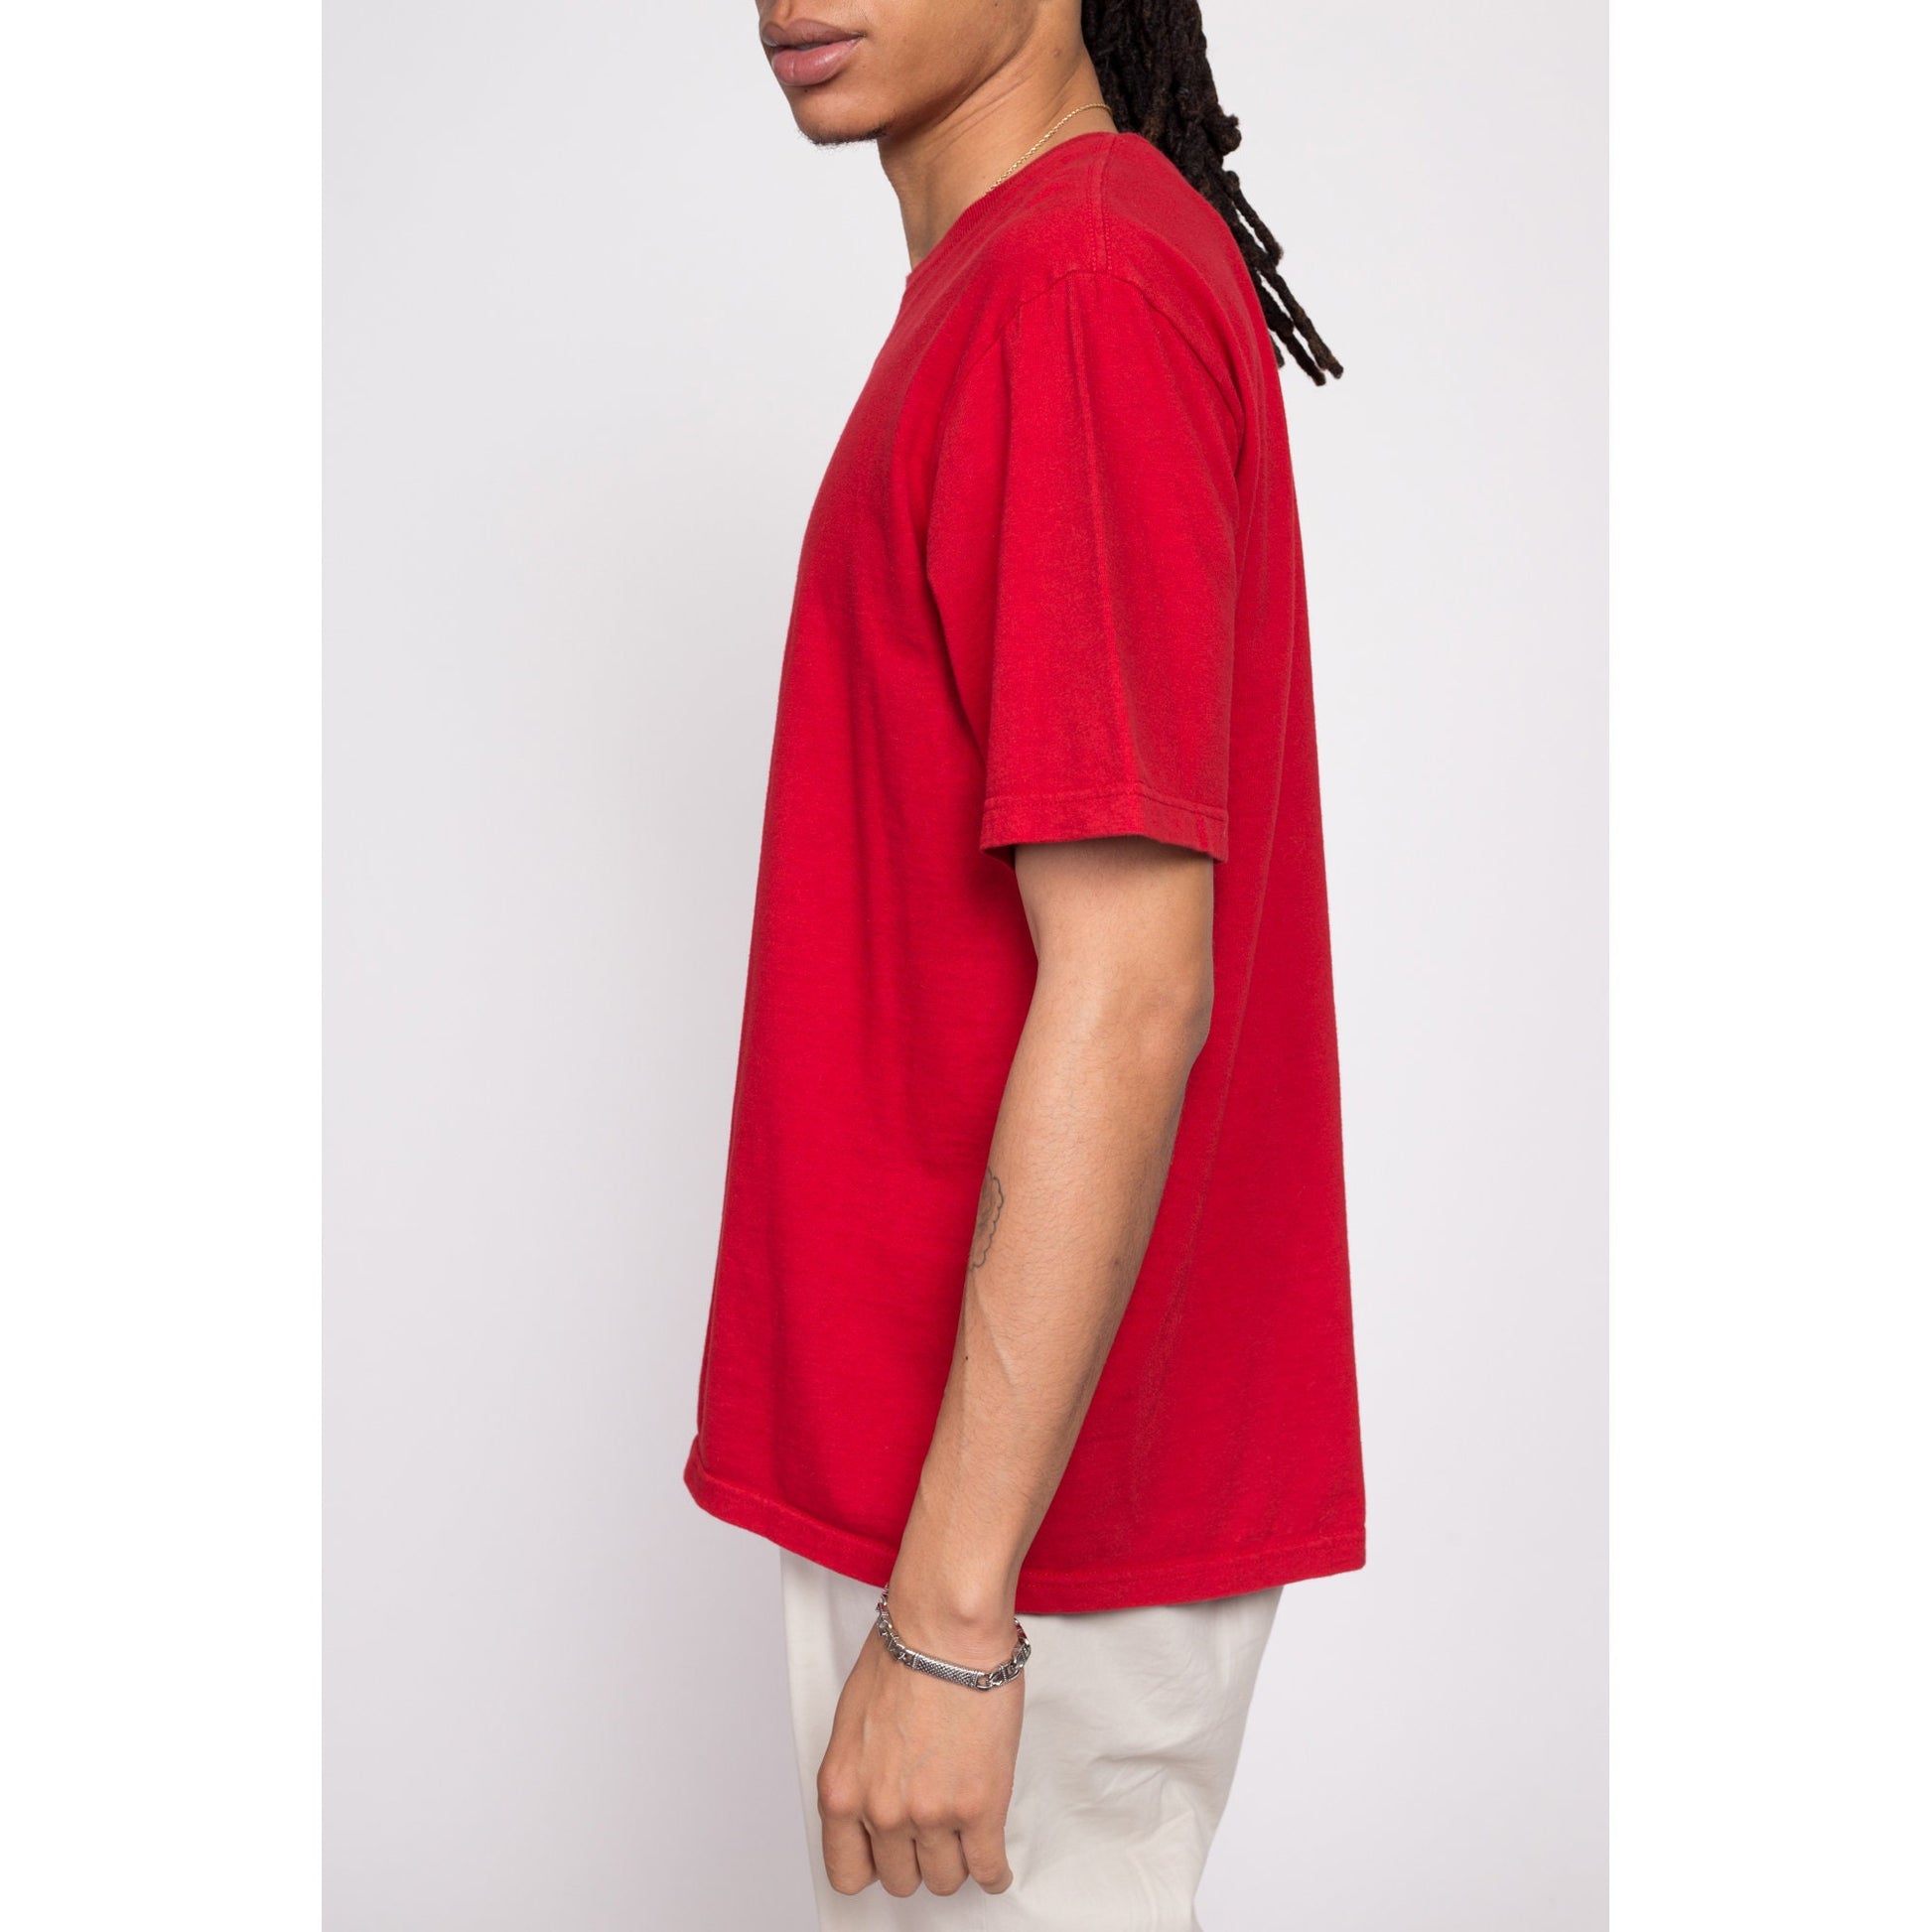 Supreme Men's Red T-shirts